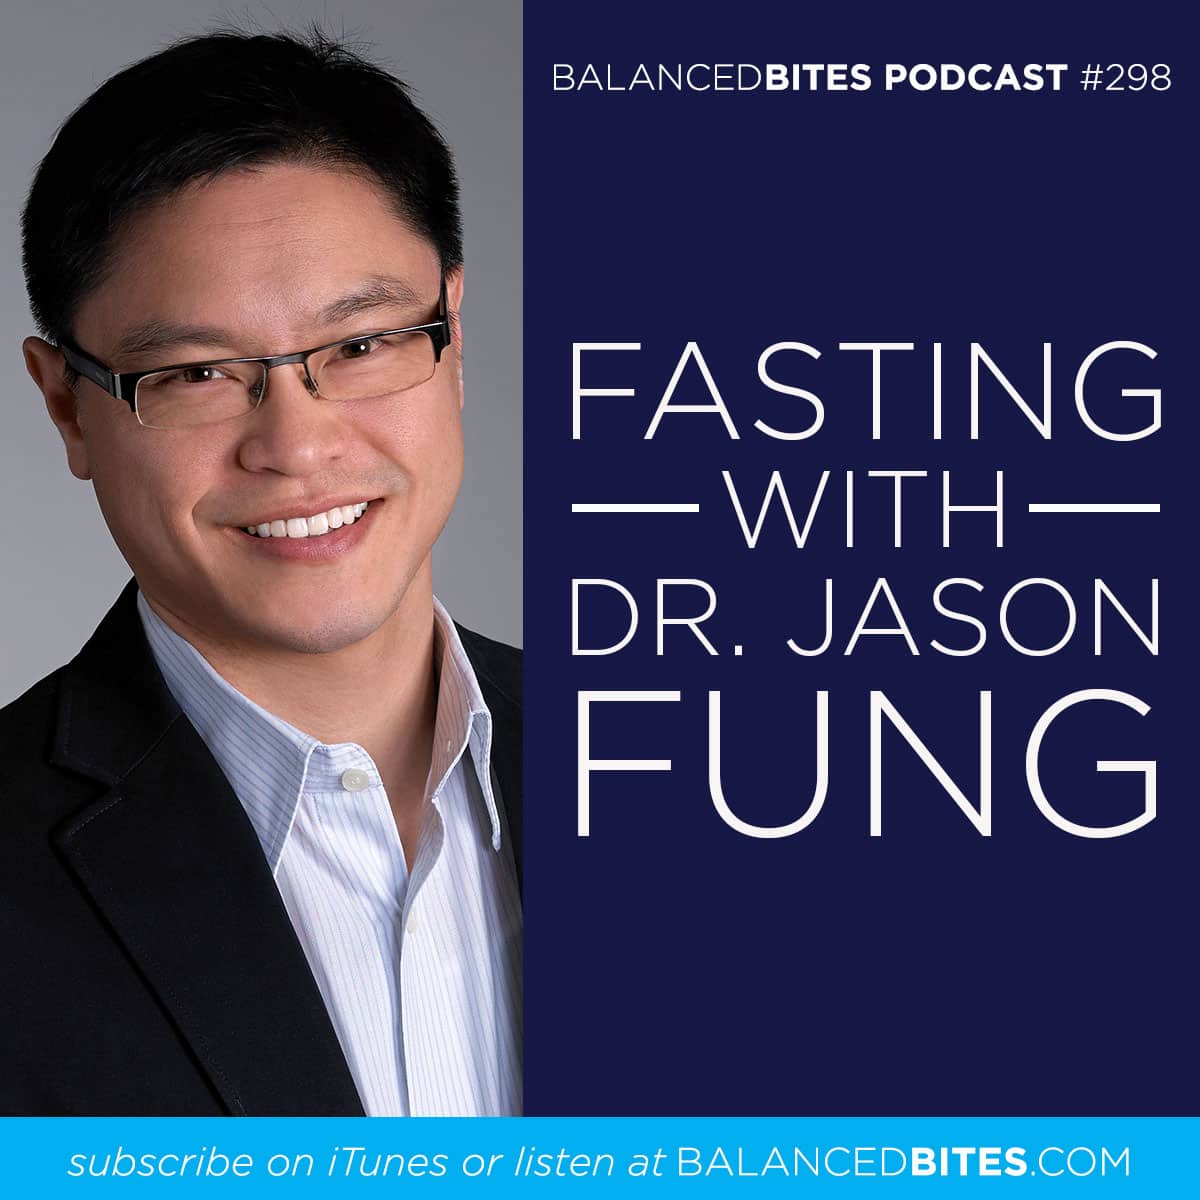 Diane Sanfilippo & Liz Wolfe | Balanced Bites Podcast | Fasting with Dr. Jason Fung